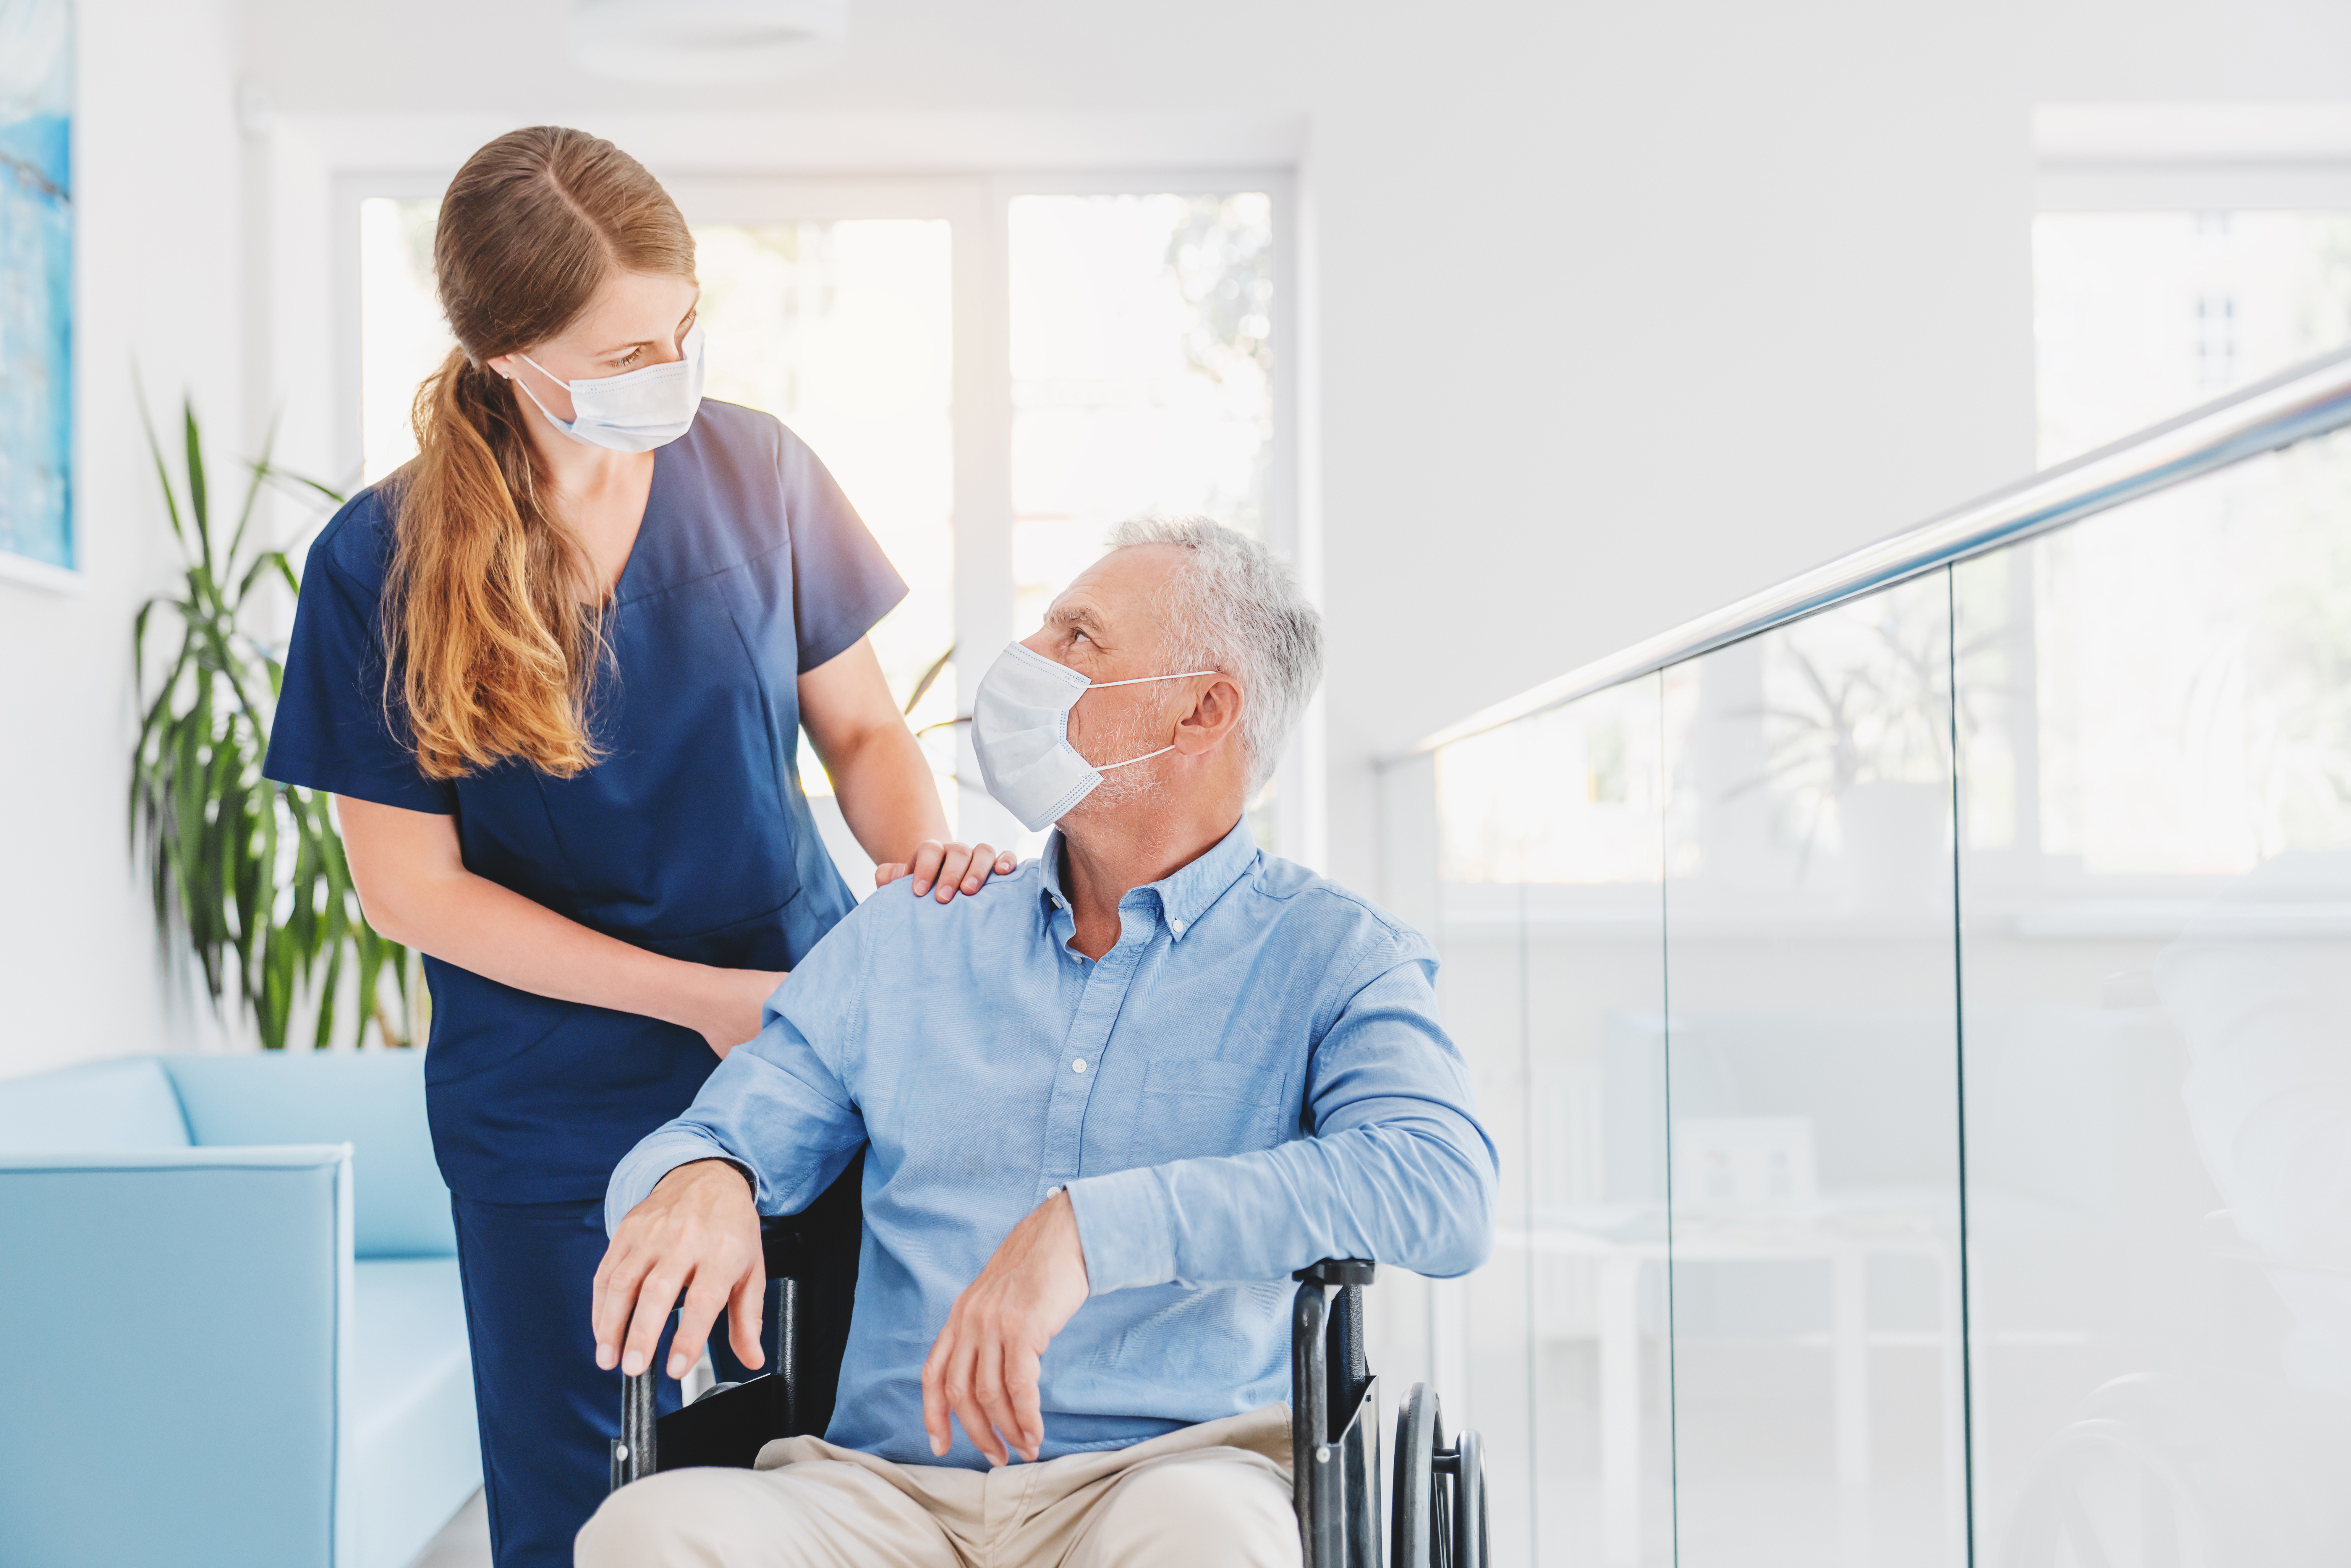 Stock image of a nurse helping an older gentlman in a wheelchair